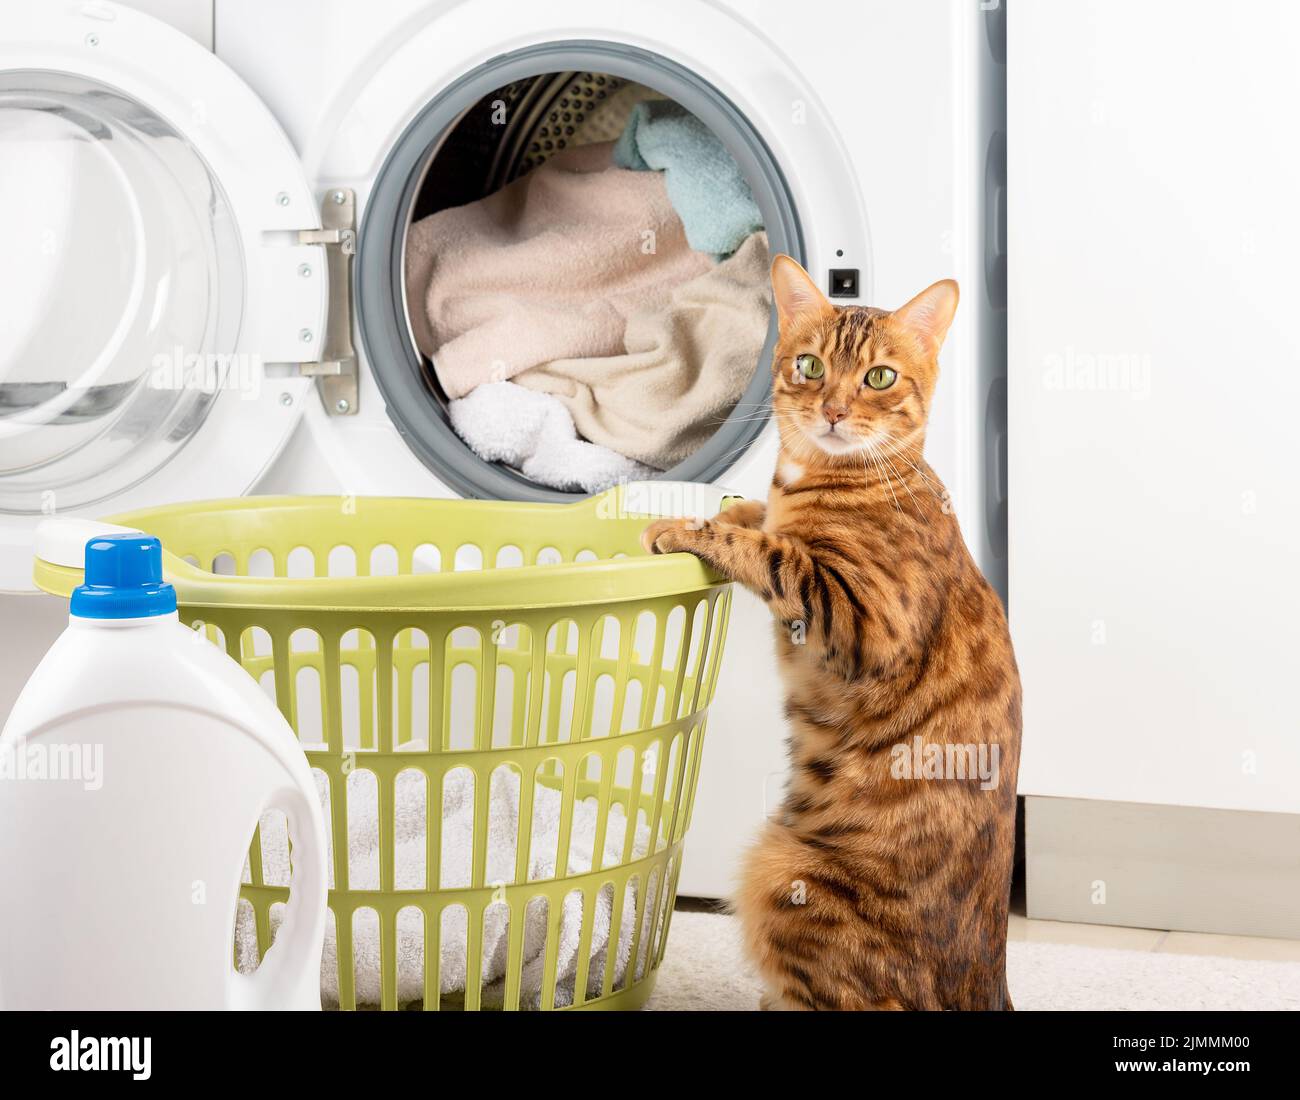 Arriba 93+ imagen gato lavando ropa